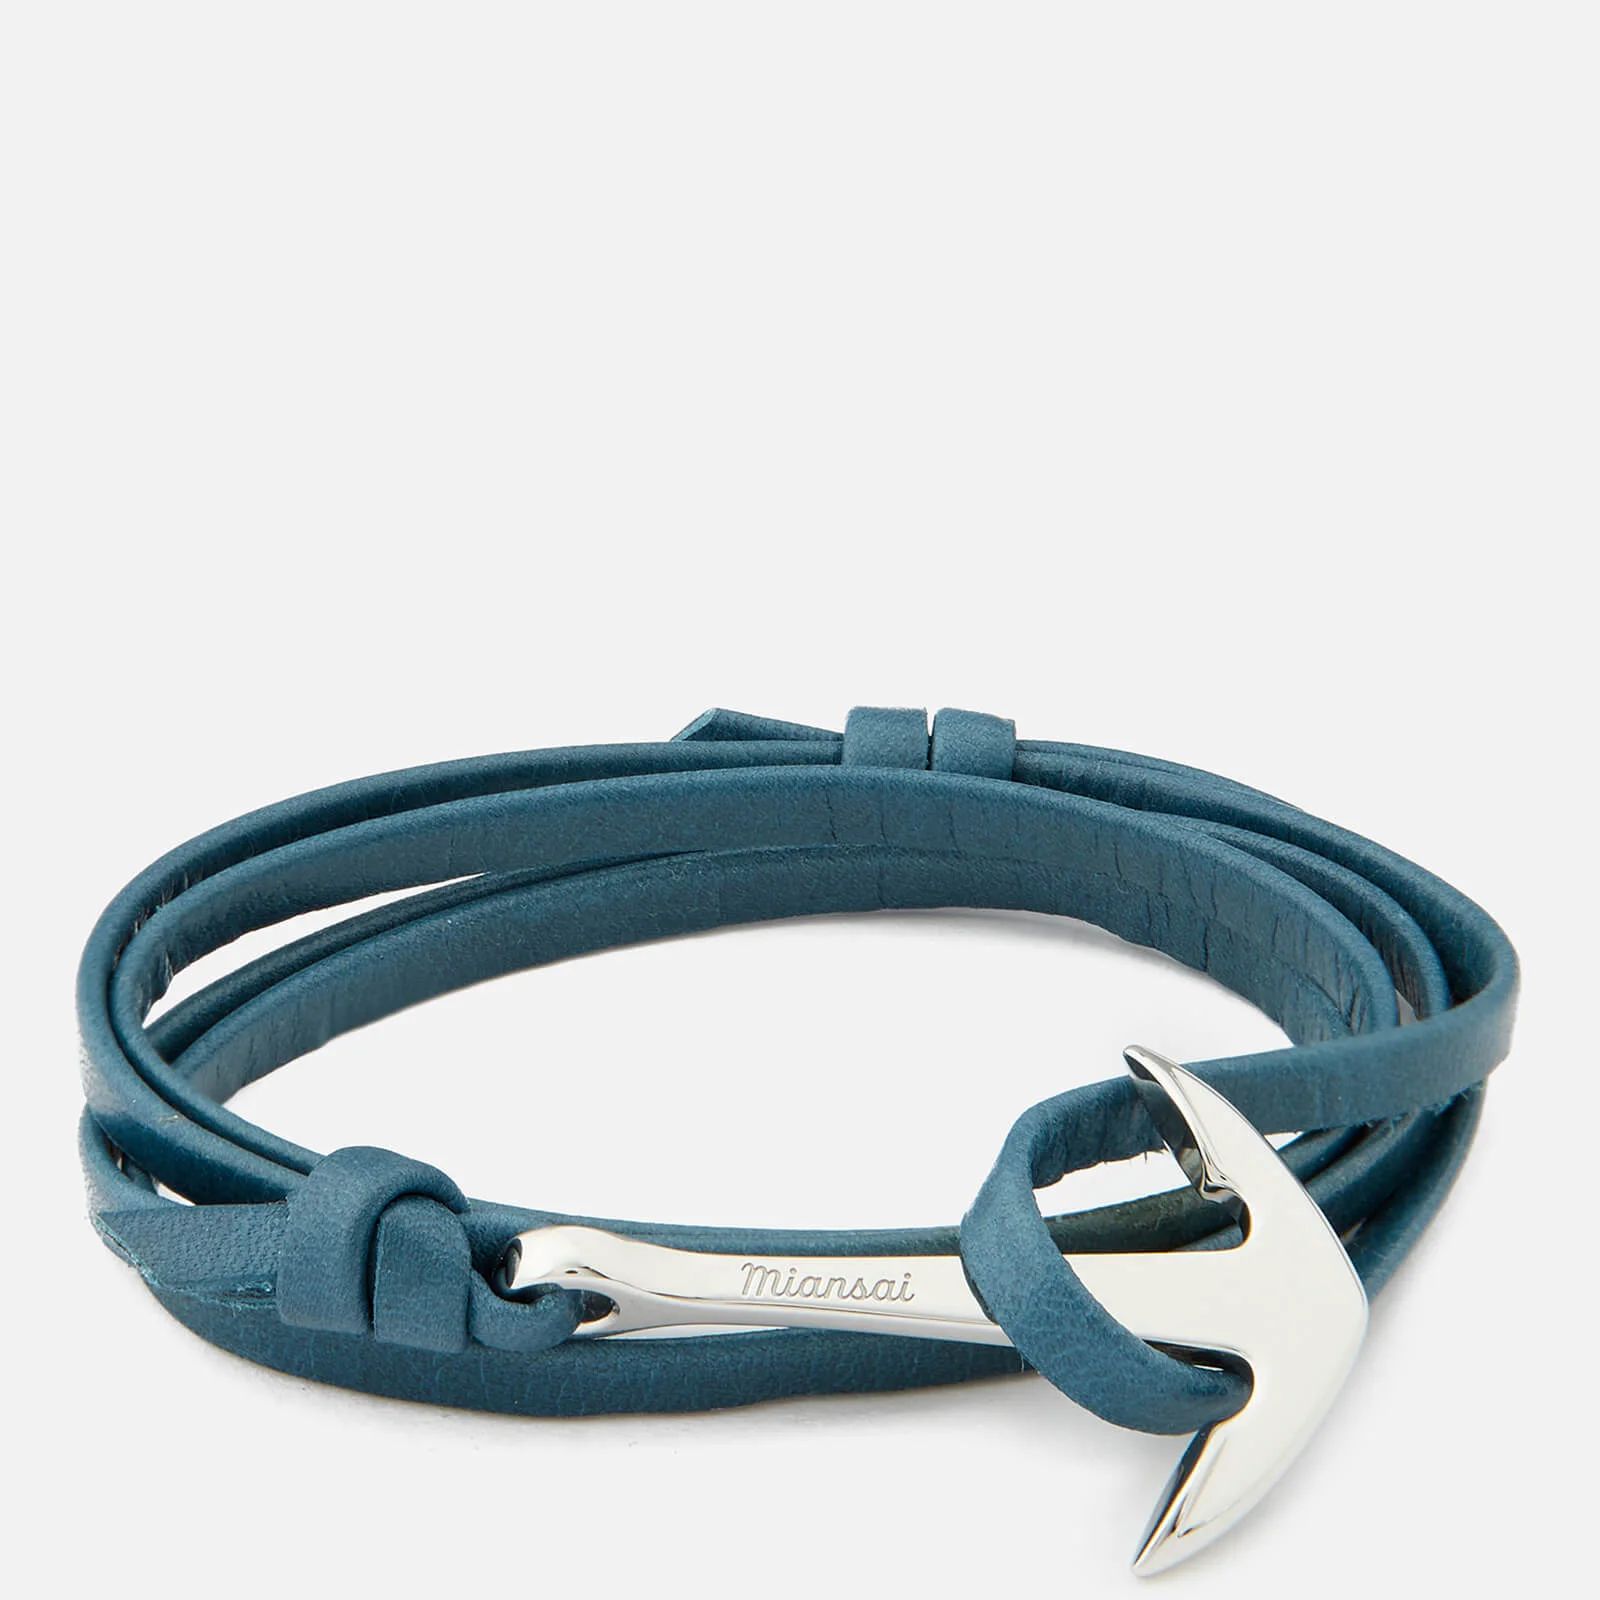 Miansai Men's Leather Bracelet with Silver Anchor - Slate Image 1